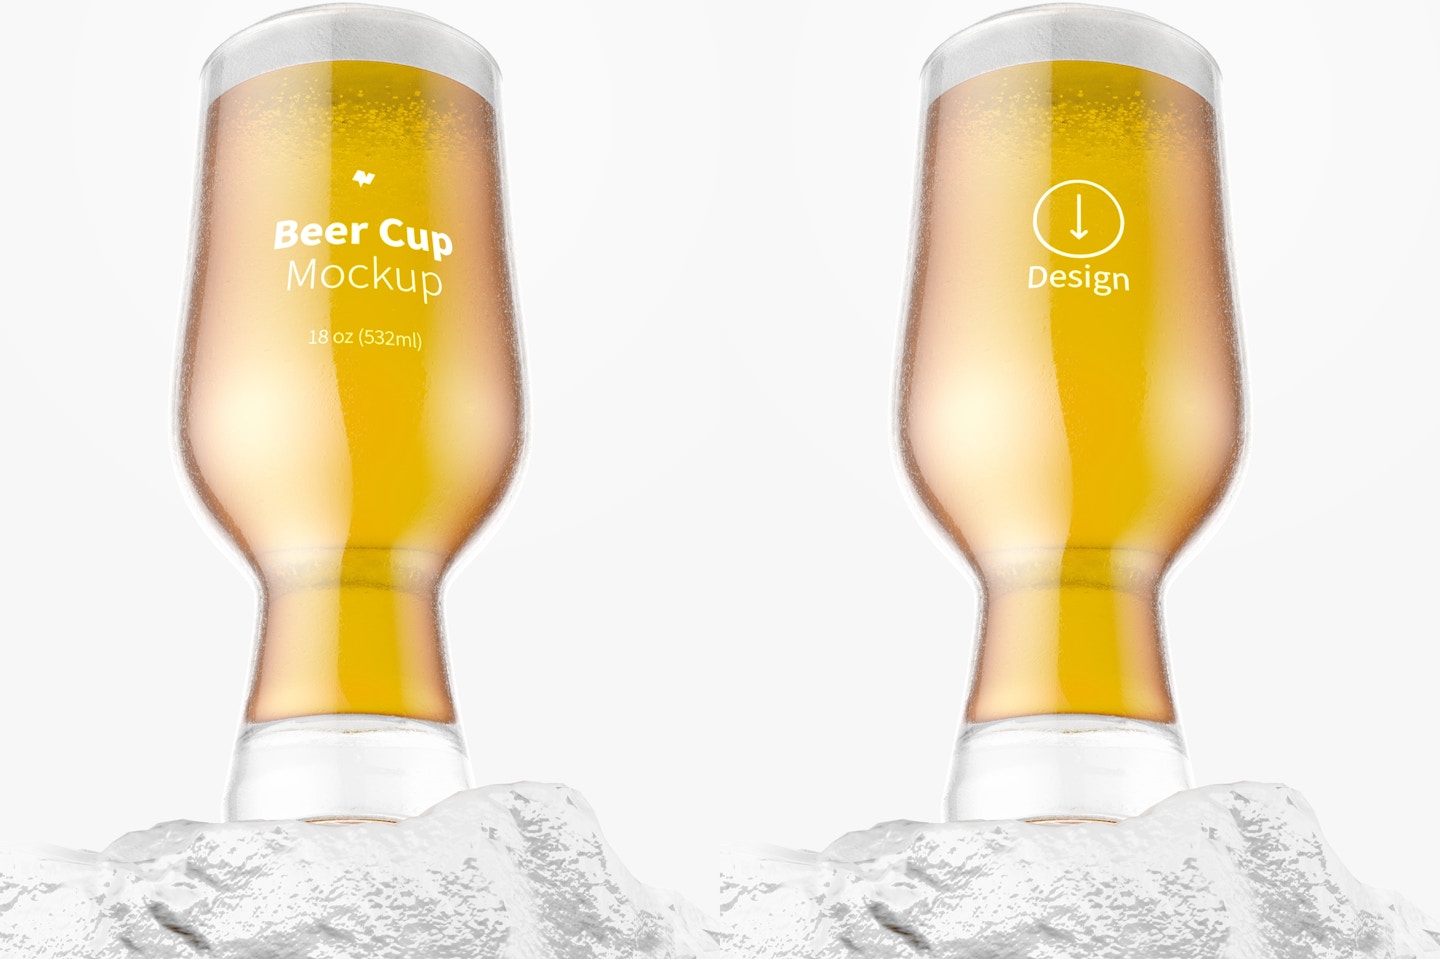 18 oz Glass Beer Cup Mockup